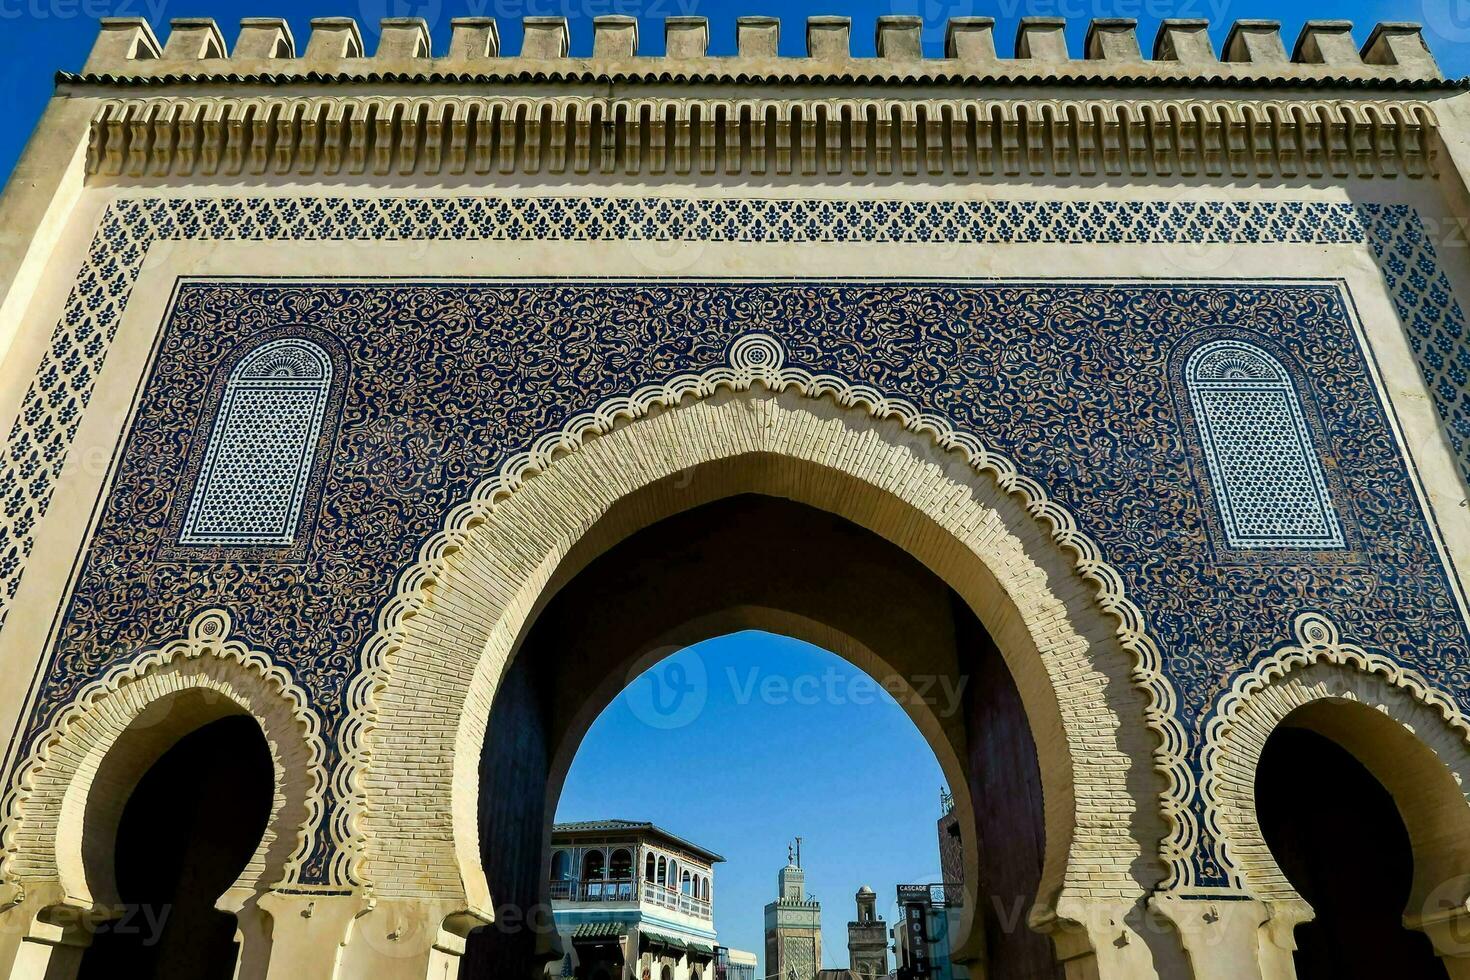 architectuur in Marokko foto